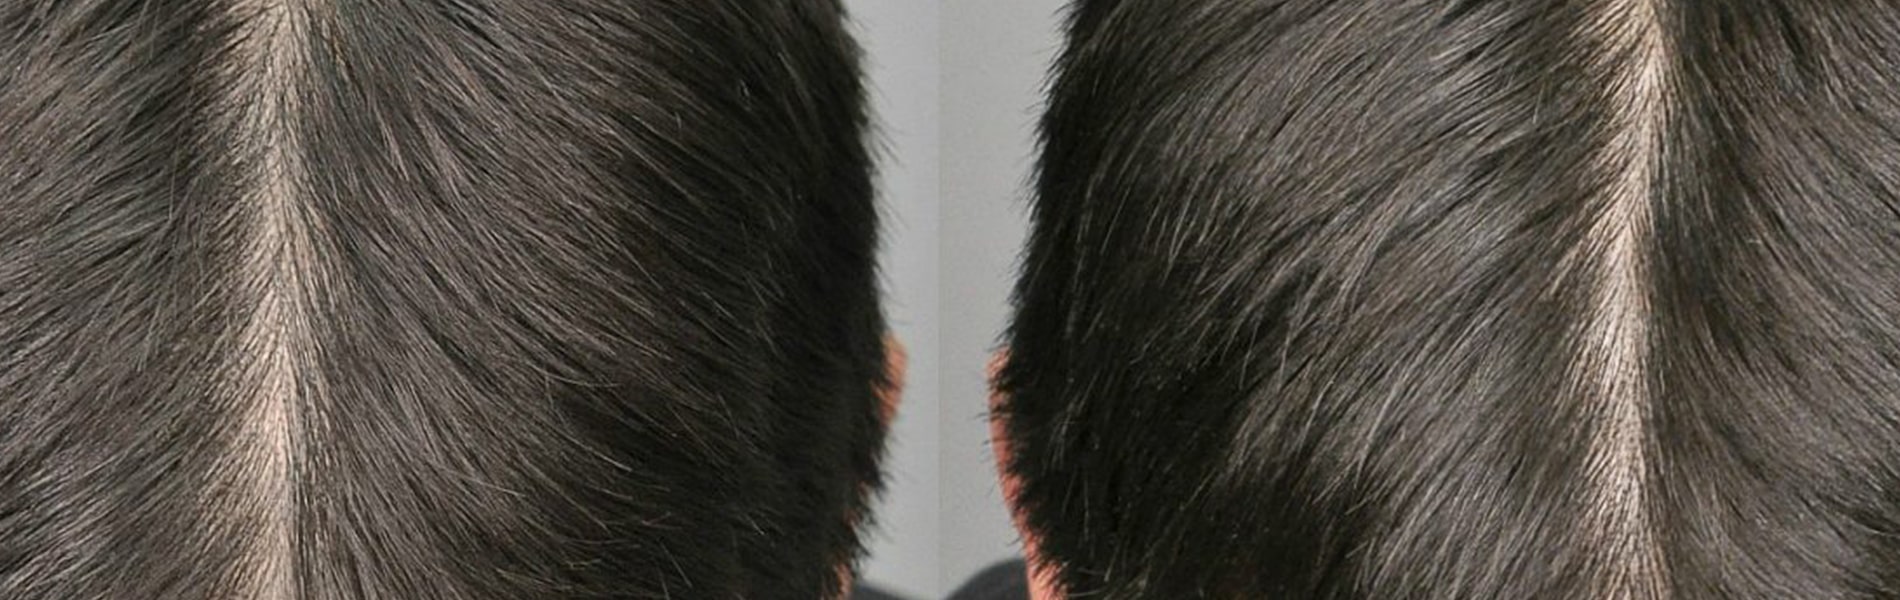 Benefits of hair fall treatment